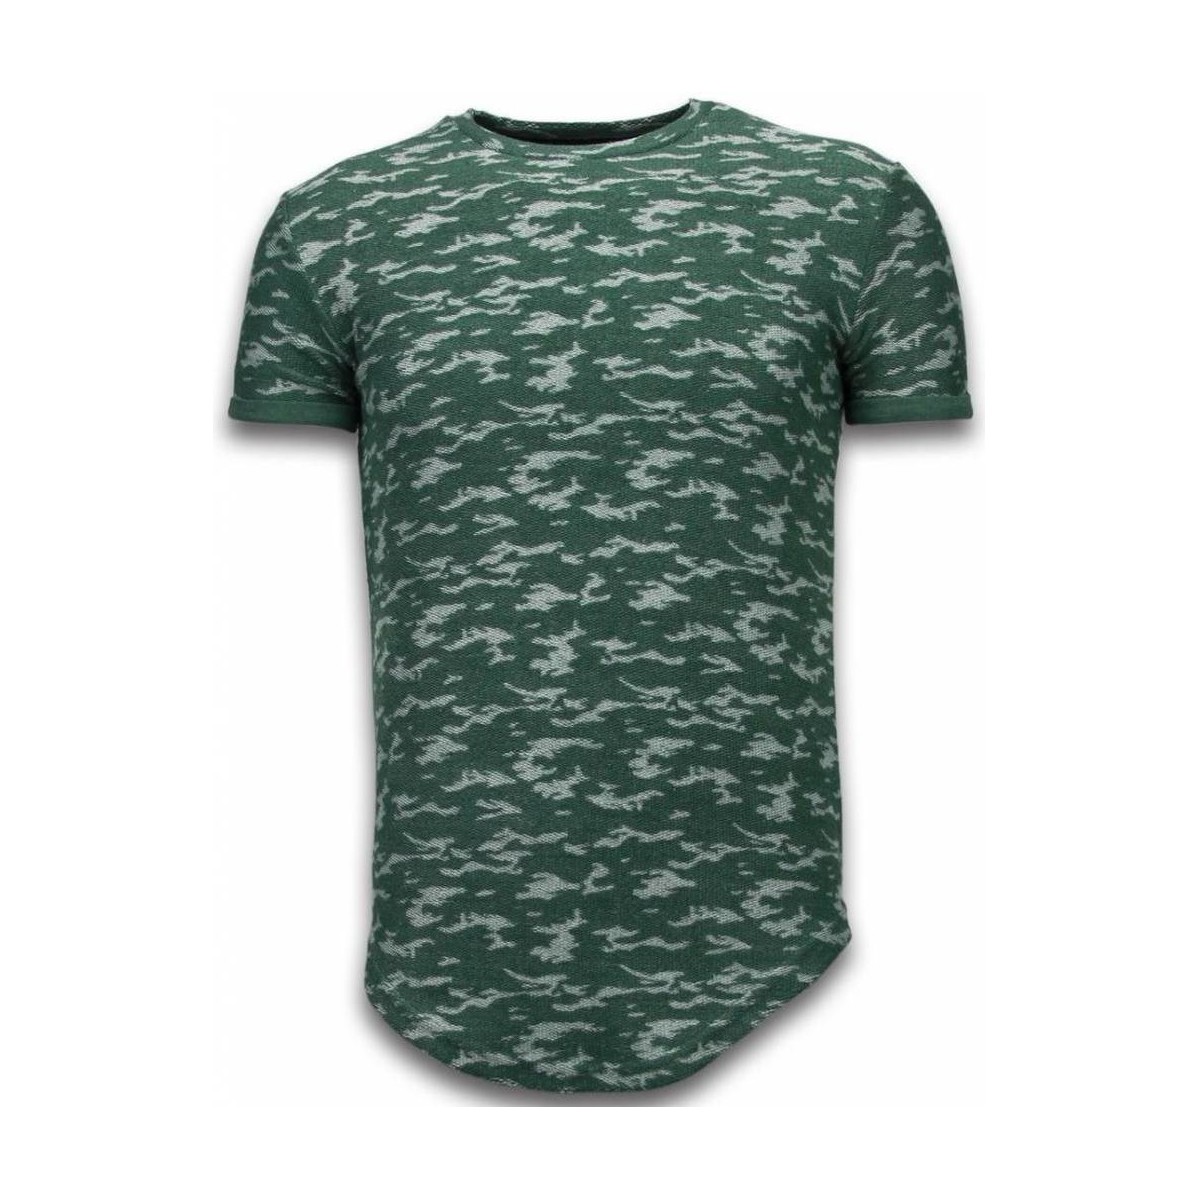 Kleidung Herren T-Shirts Justing Fashionable Camouflage Long Army Grün